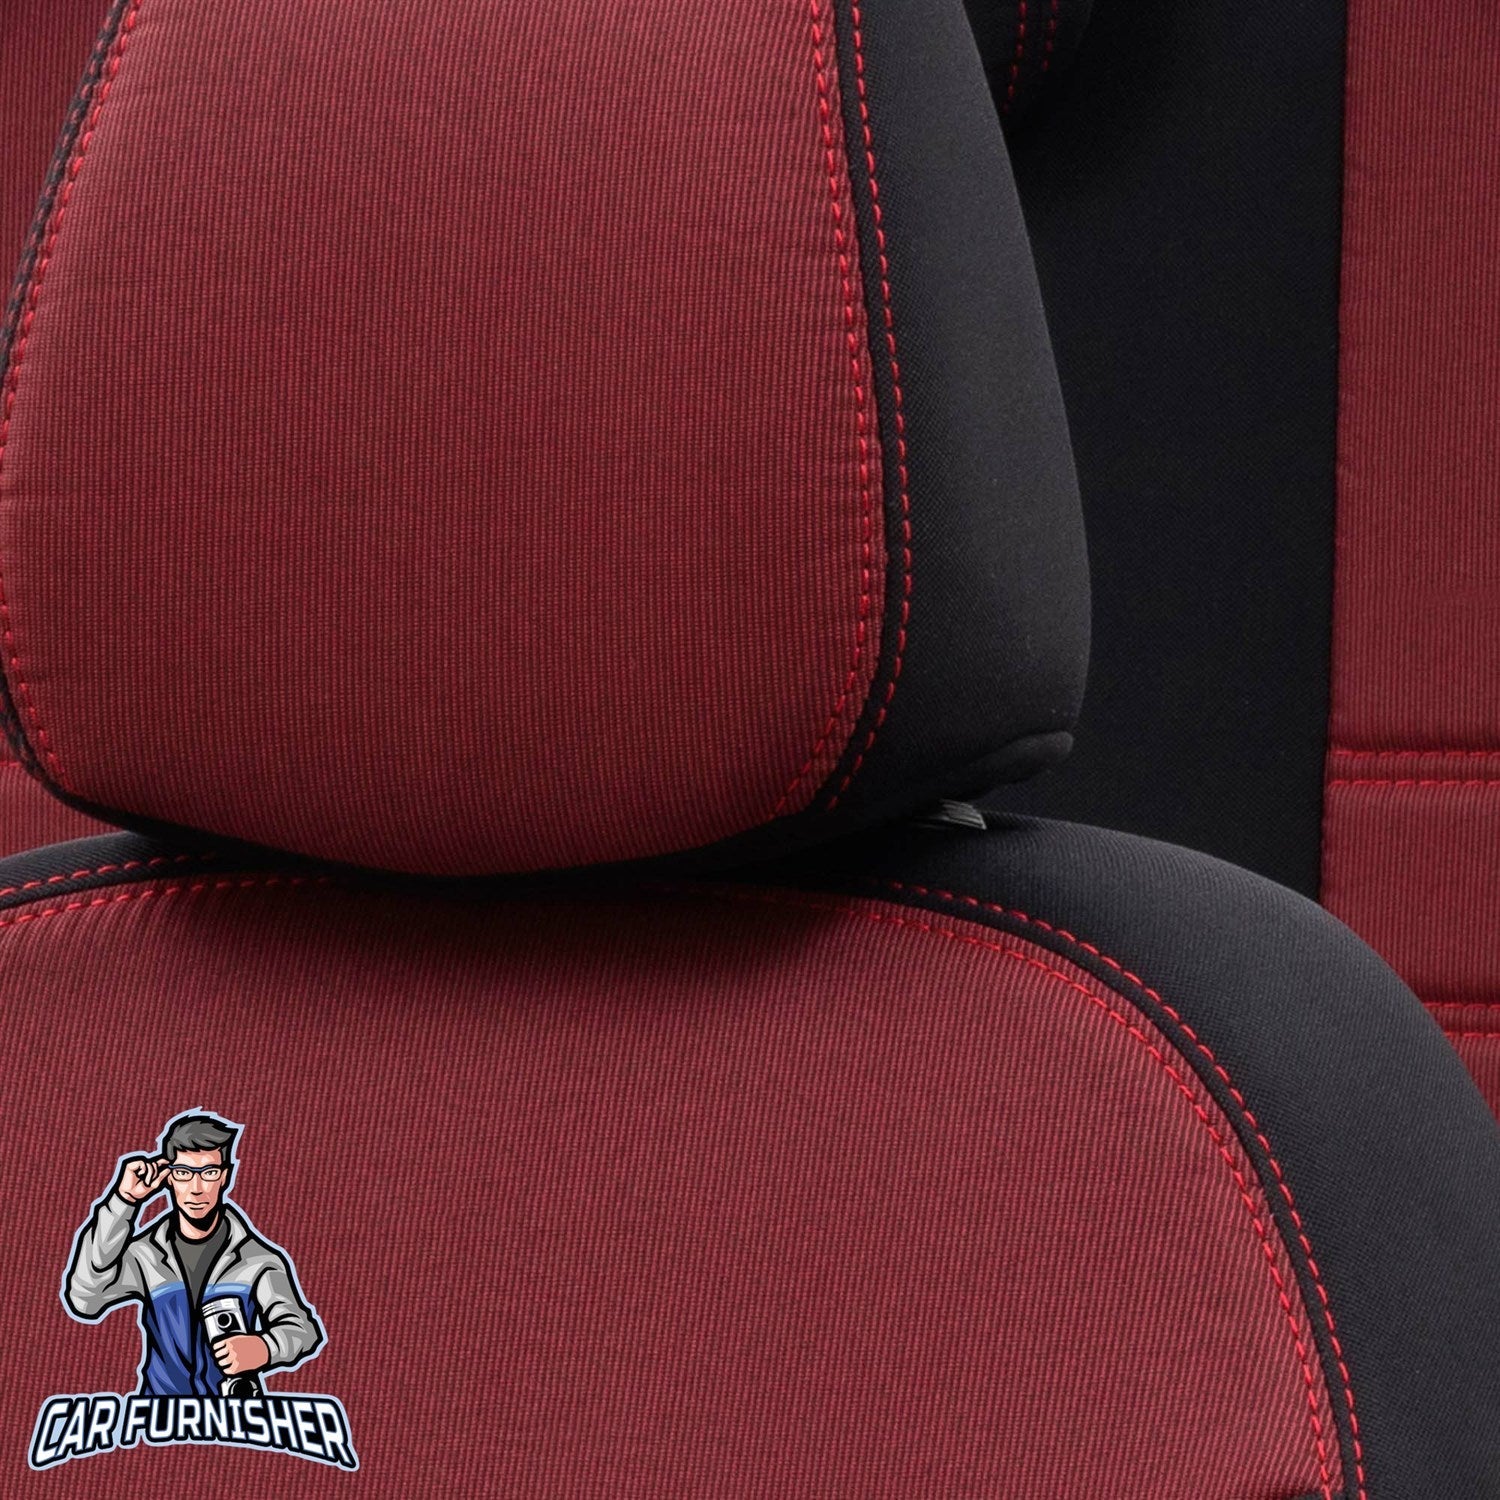 Audi A1 Seat Cover Original Jacquard Design Red Jacquard Fabric